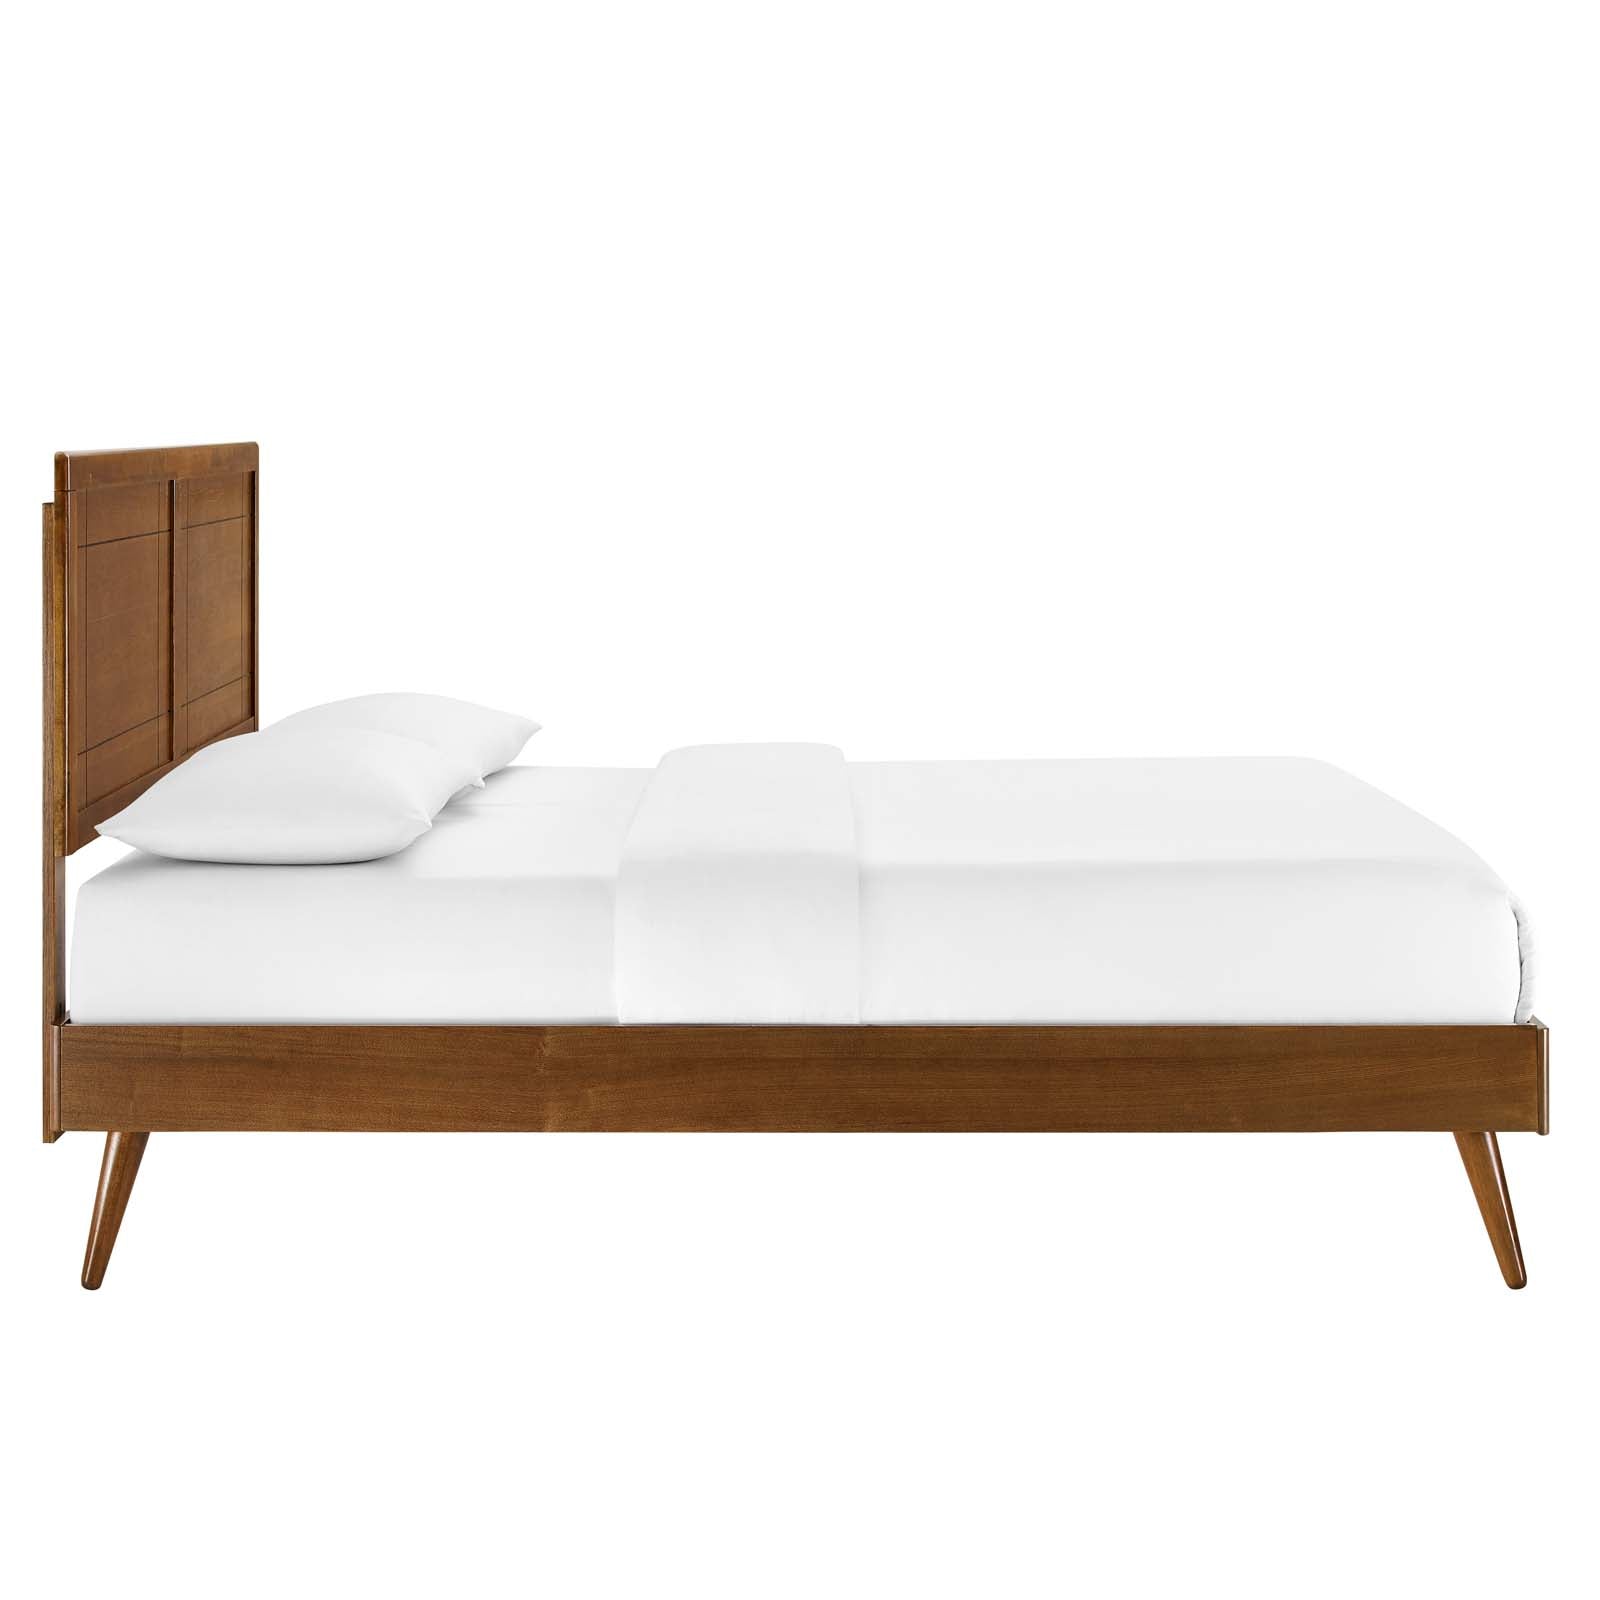 Marlee Wood Platform Bed With Splayed Legs - East Shore Modern Home Furnishings